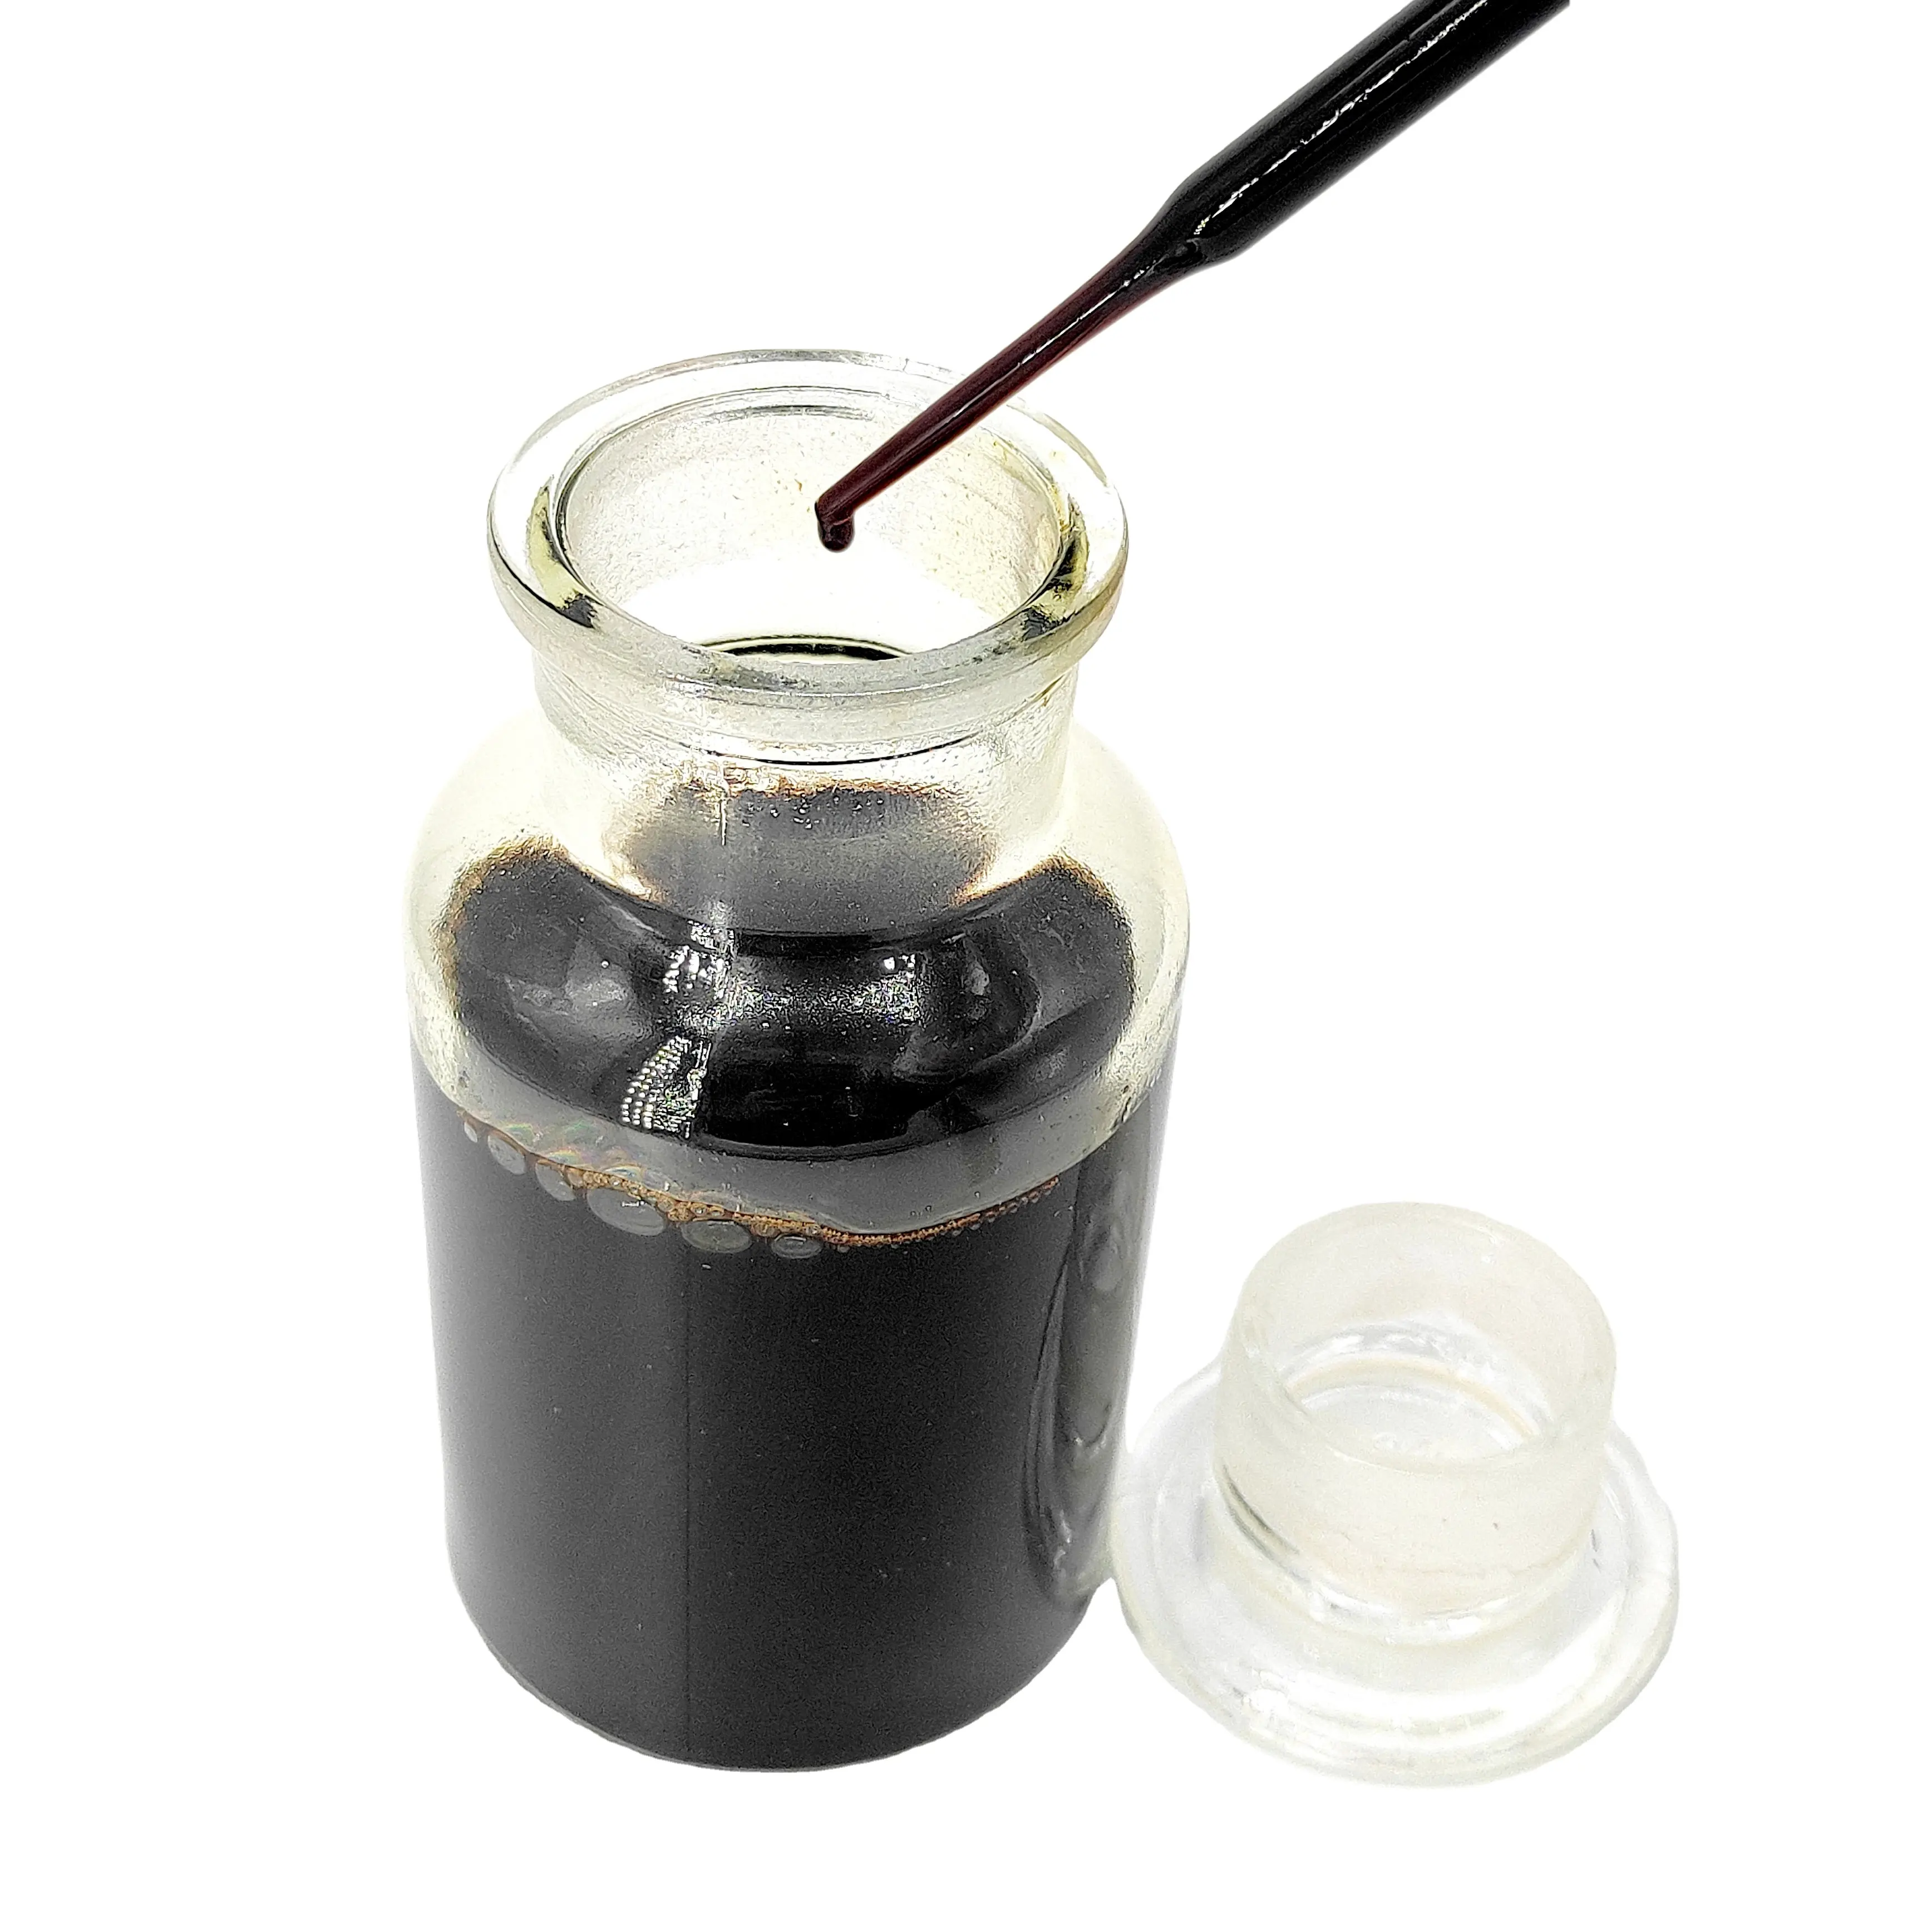 100% natural propolis extract liquid propolis liquid used for healthcare supplement